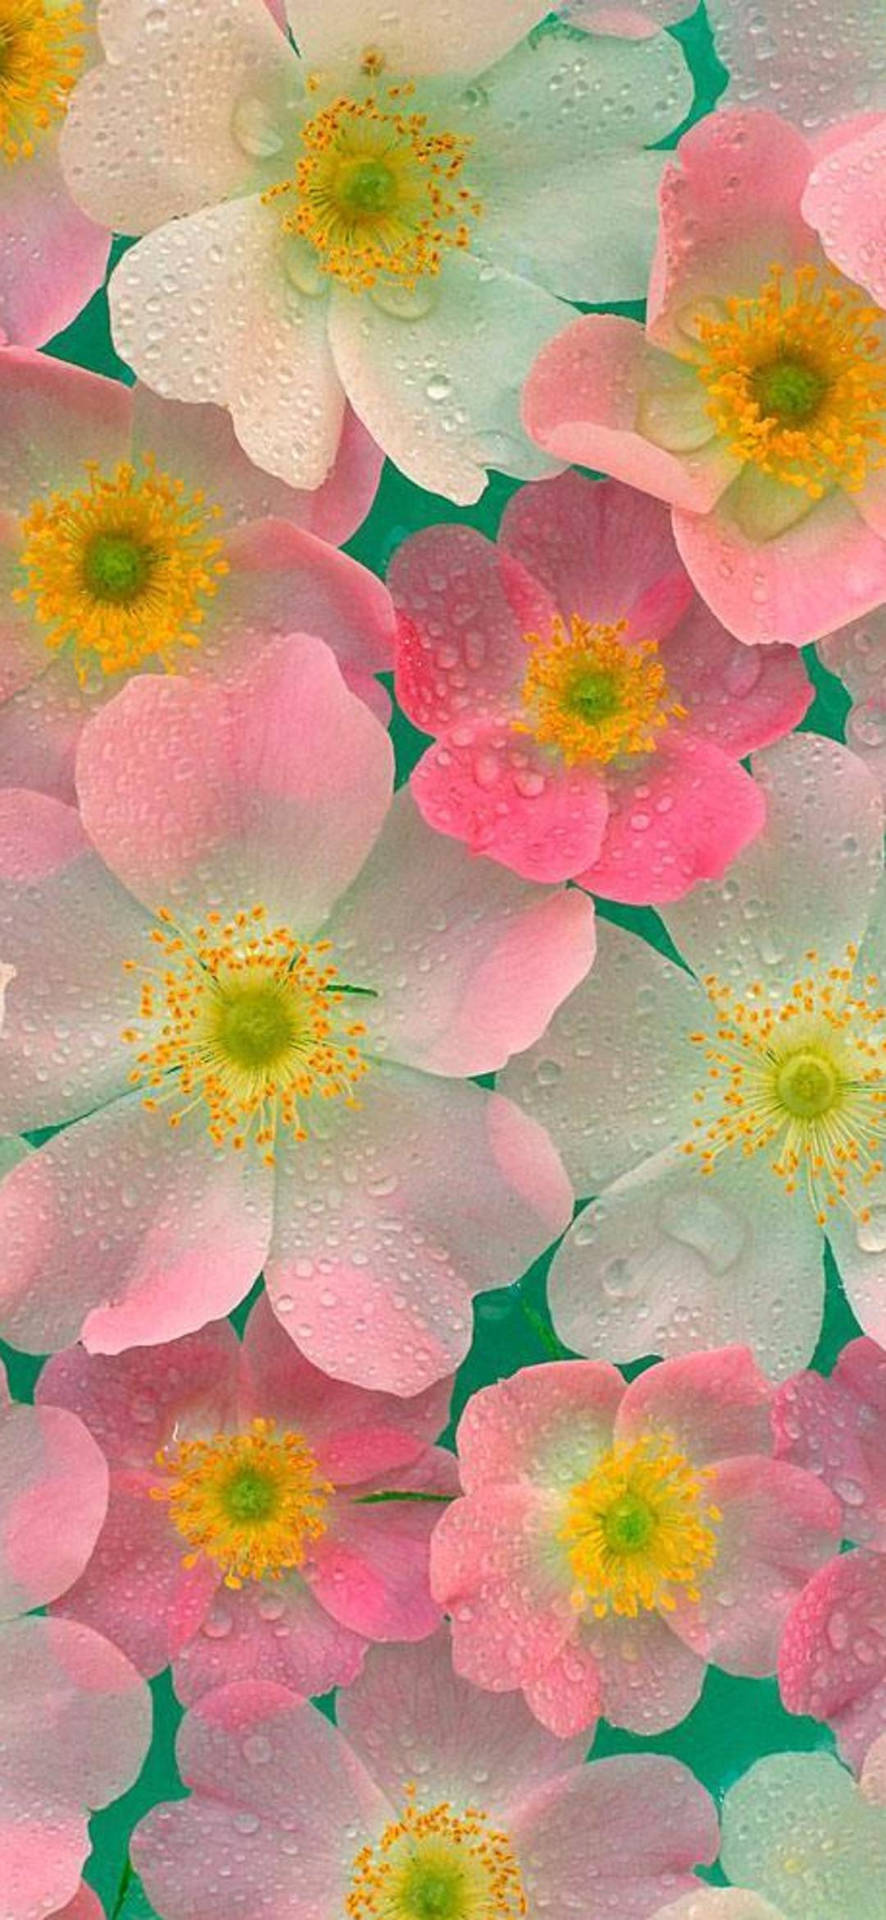 Details more than 84 flower phone wallpaper super hot